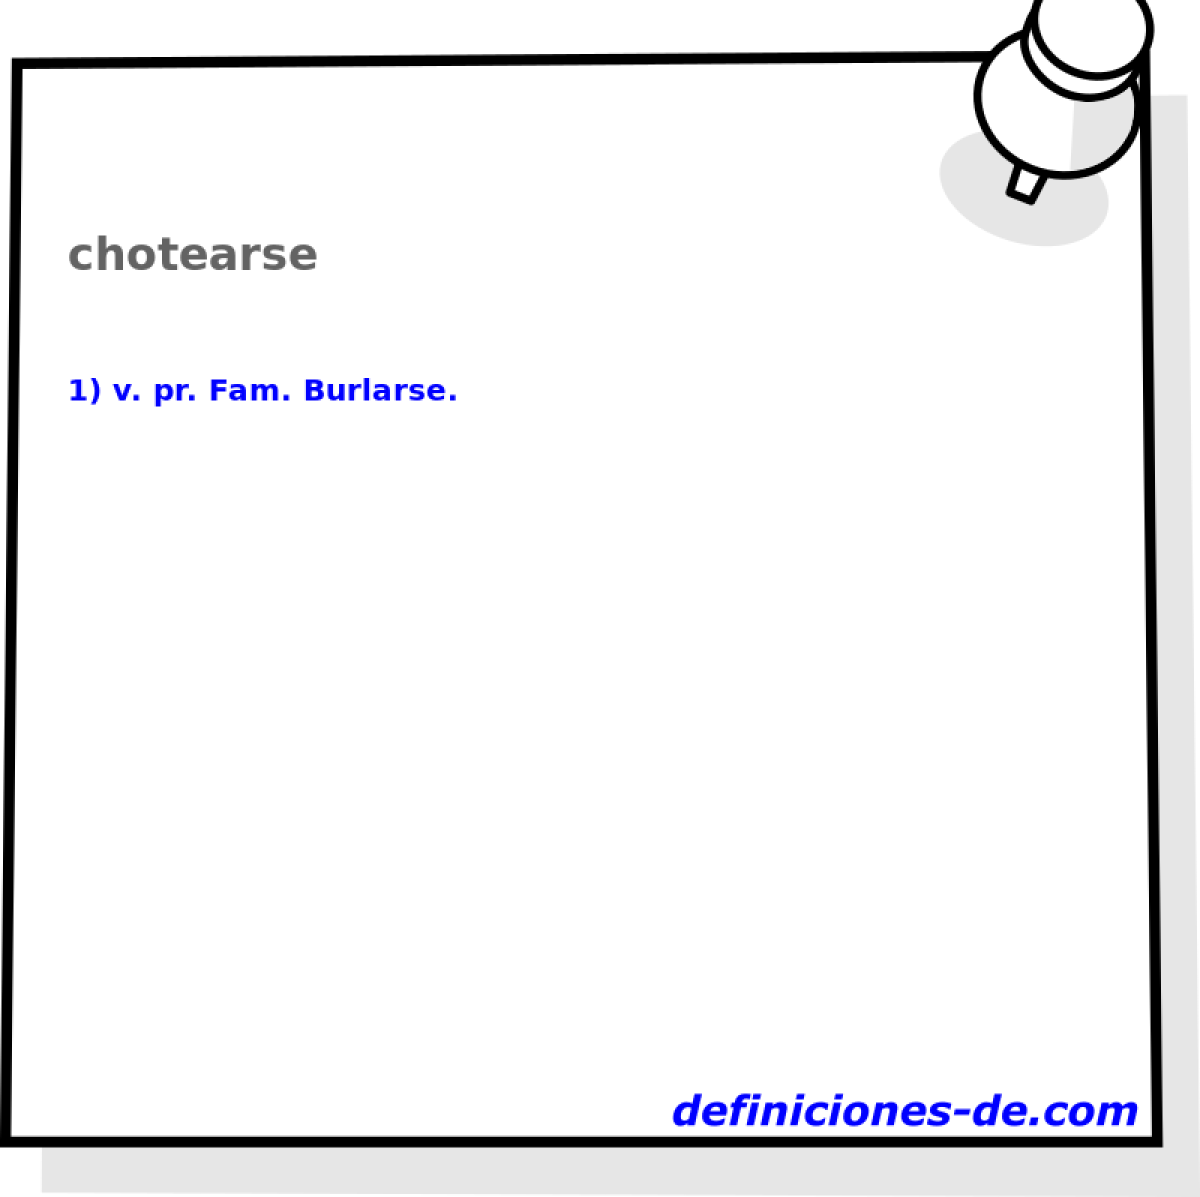 chotearse 